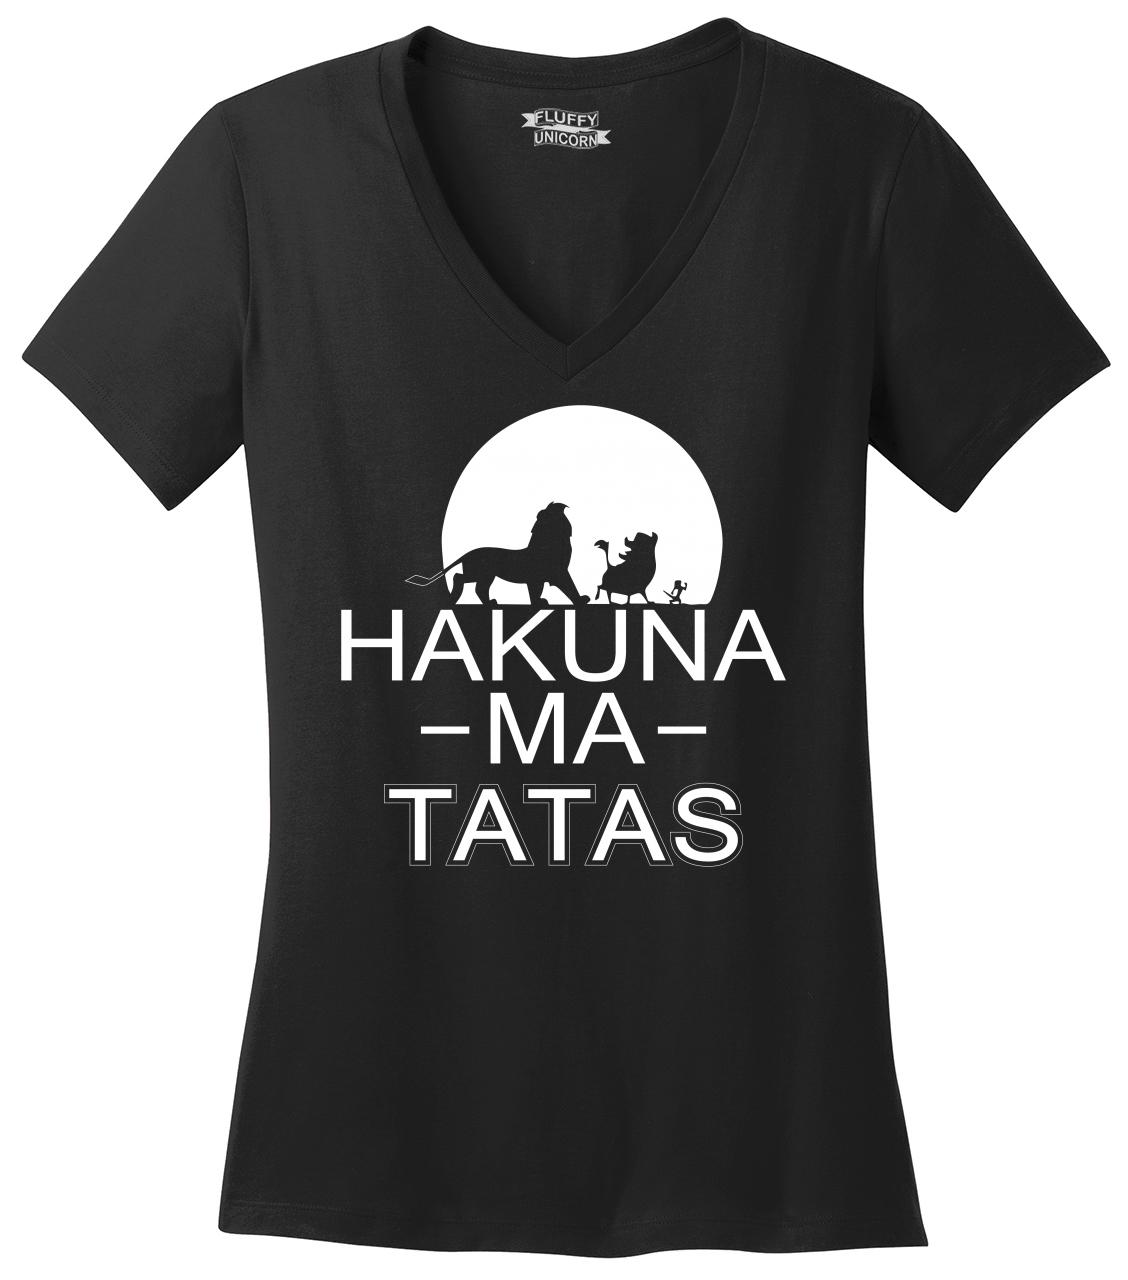 T-shirt Vest T-shirt love for life & family HAKUNA MATATAS,charity Race cancer